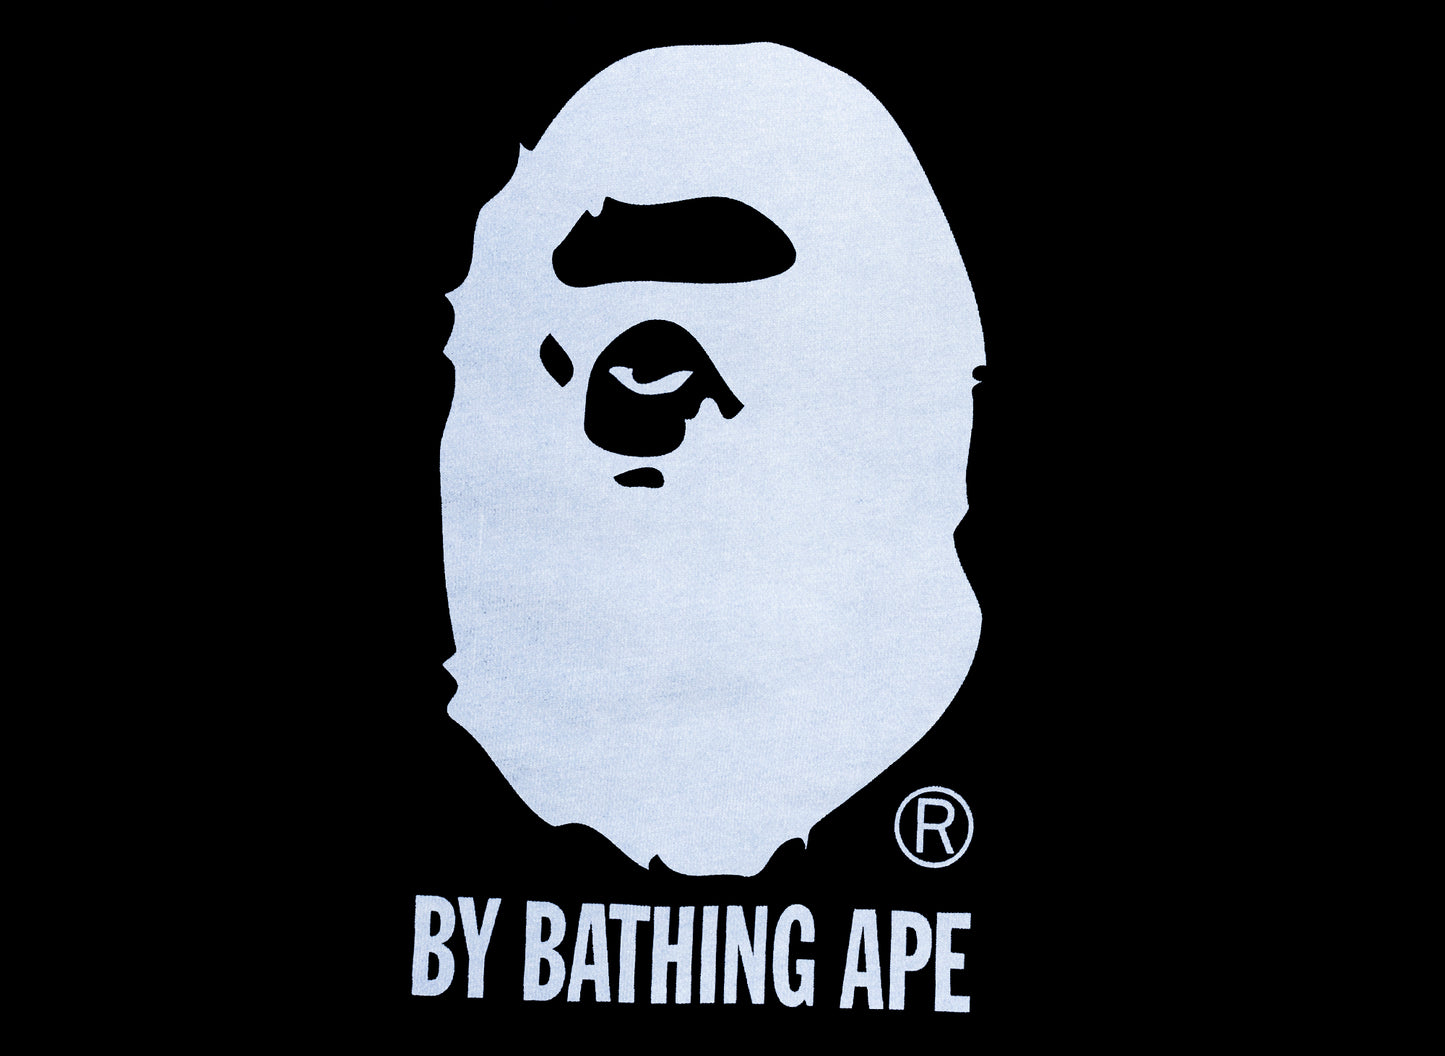 A Bathing Ape By Bathing Ape Overdye Crewneck in Black